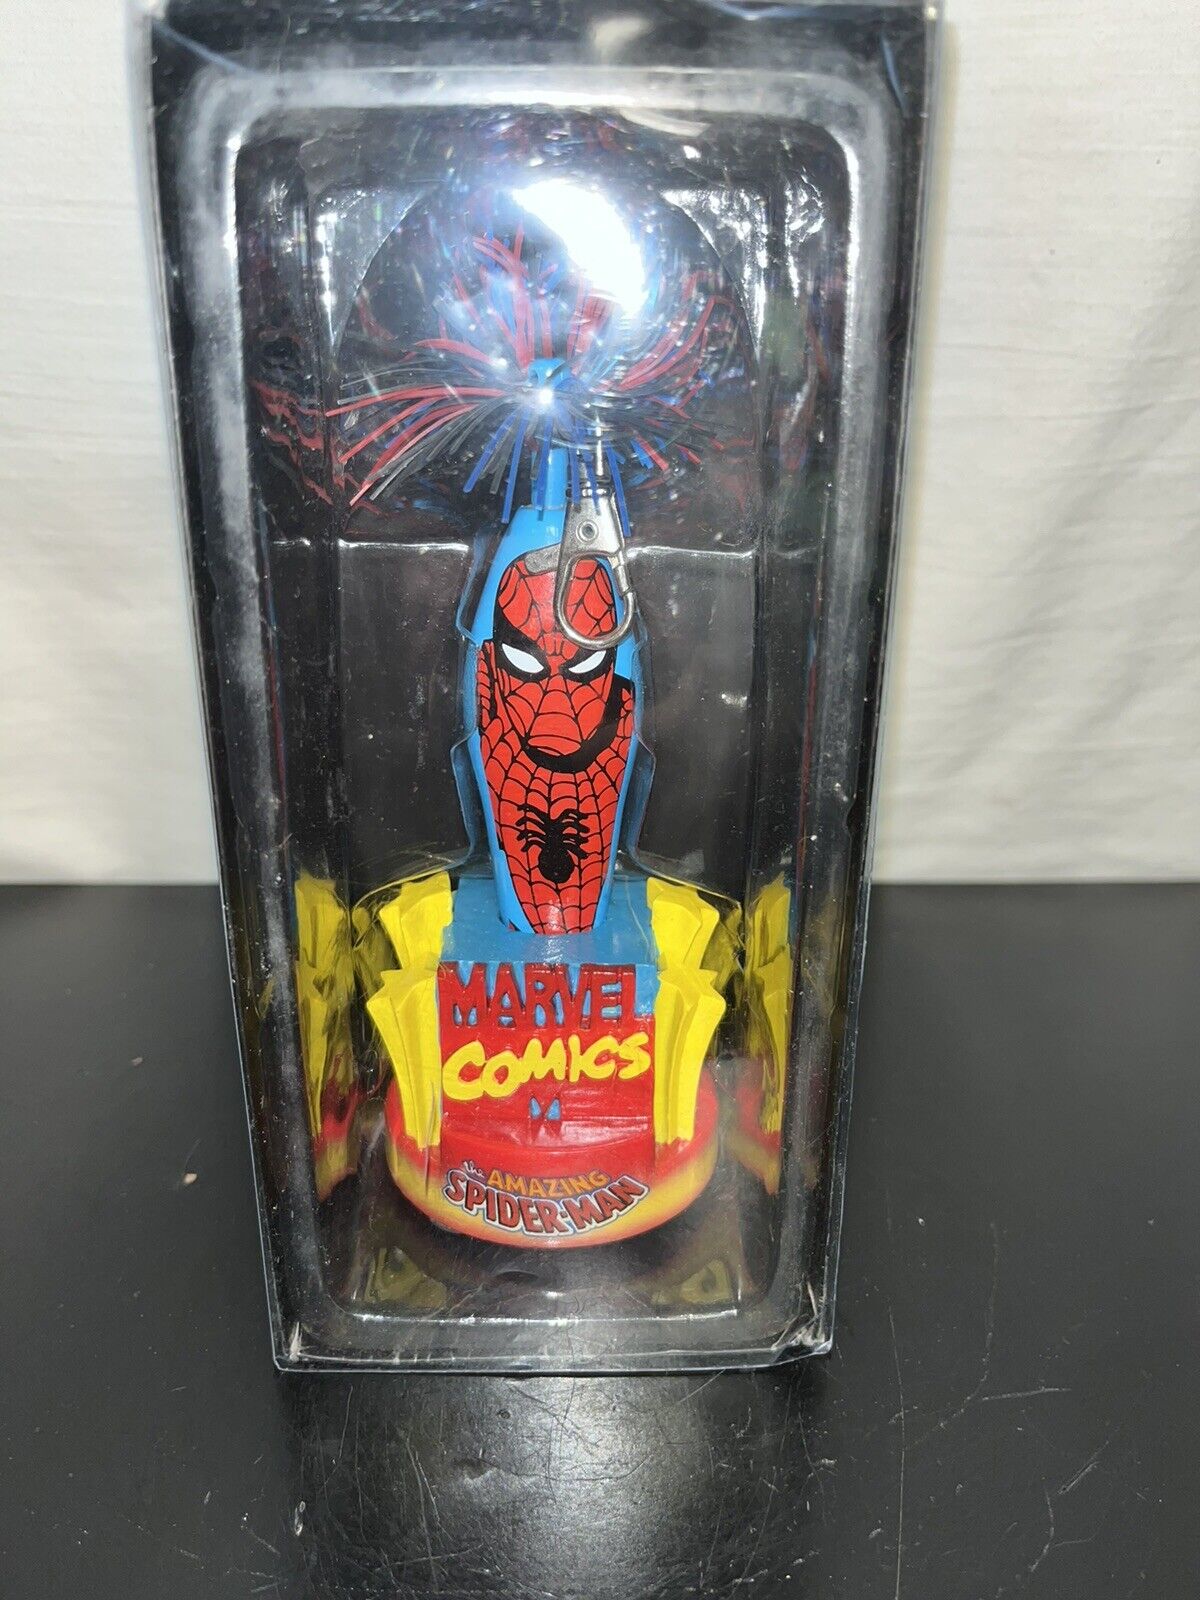 Kooky Kollectibles Marvel Comics Spiderman Limited Edition Pen 1 of 500 Case COA